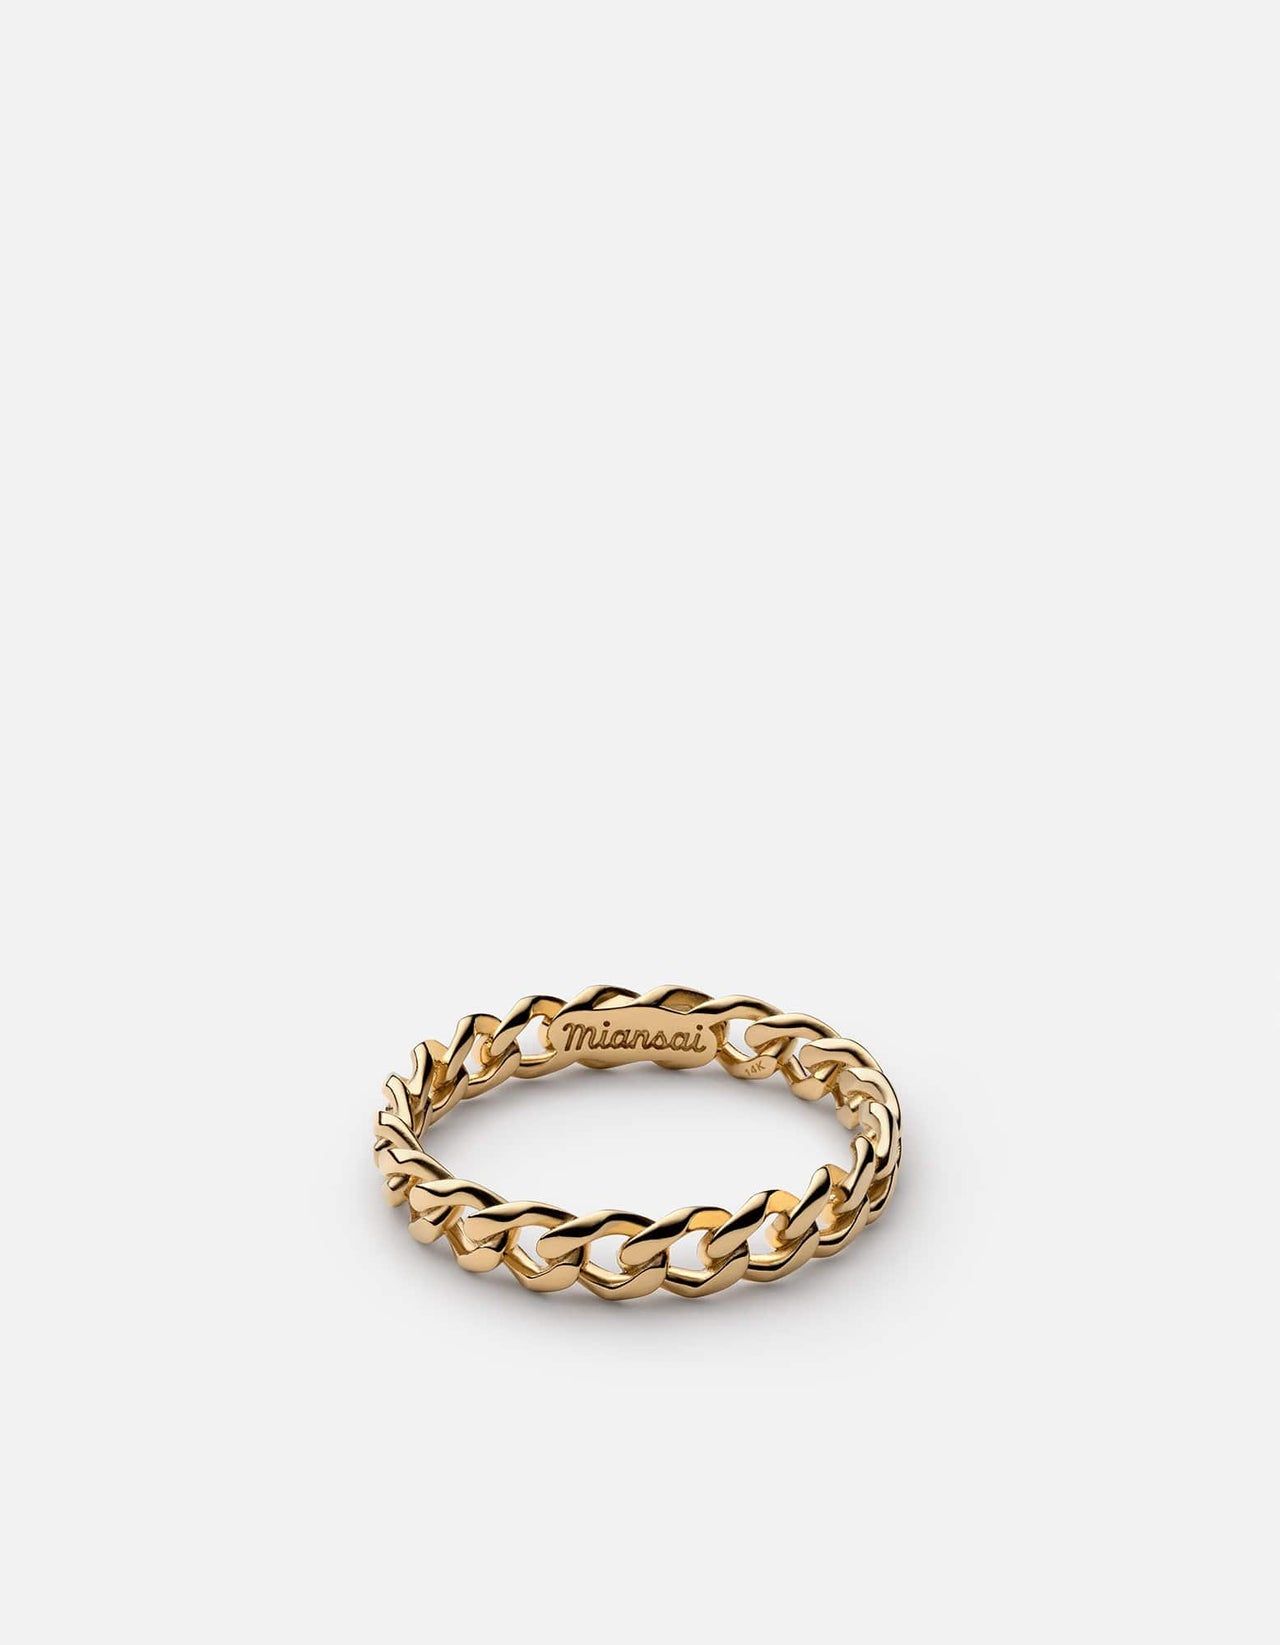 14K Gold Cuban Link Ring